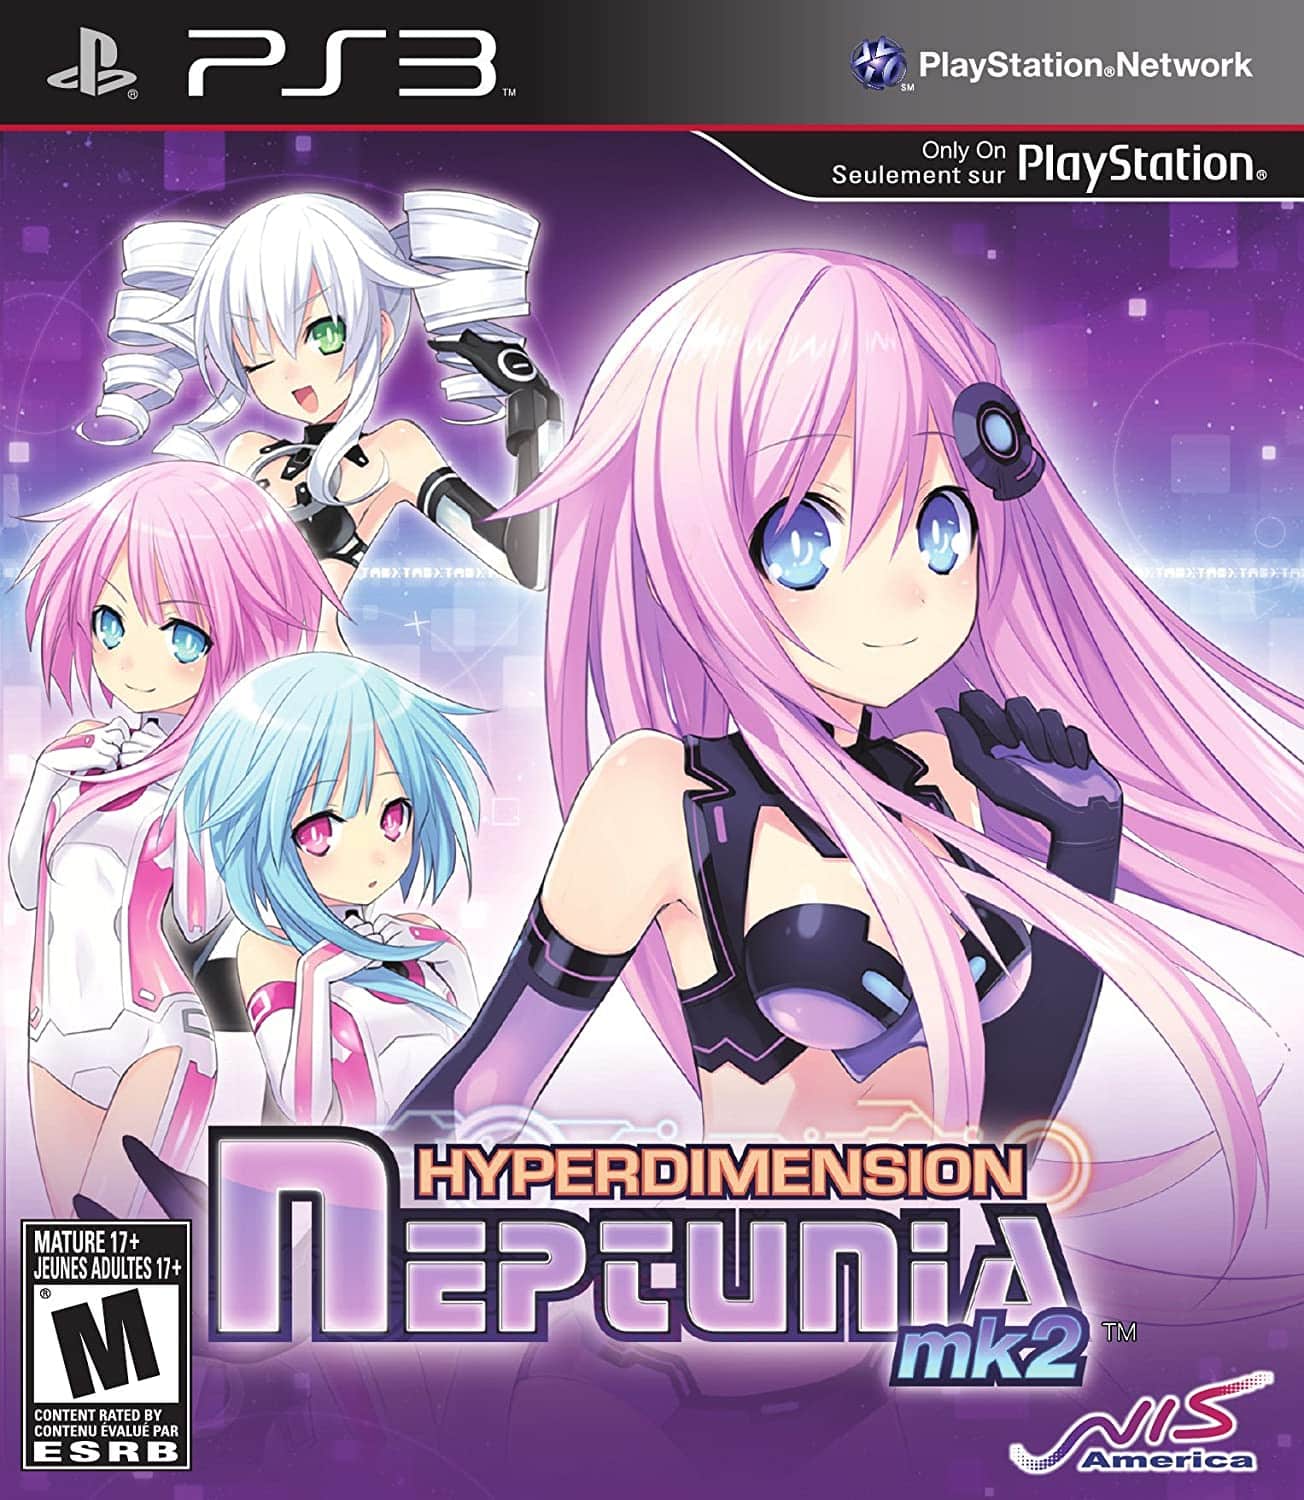 Hyperdimension Neptunia Mk2 player count stats